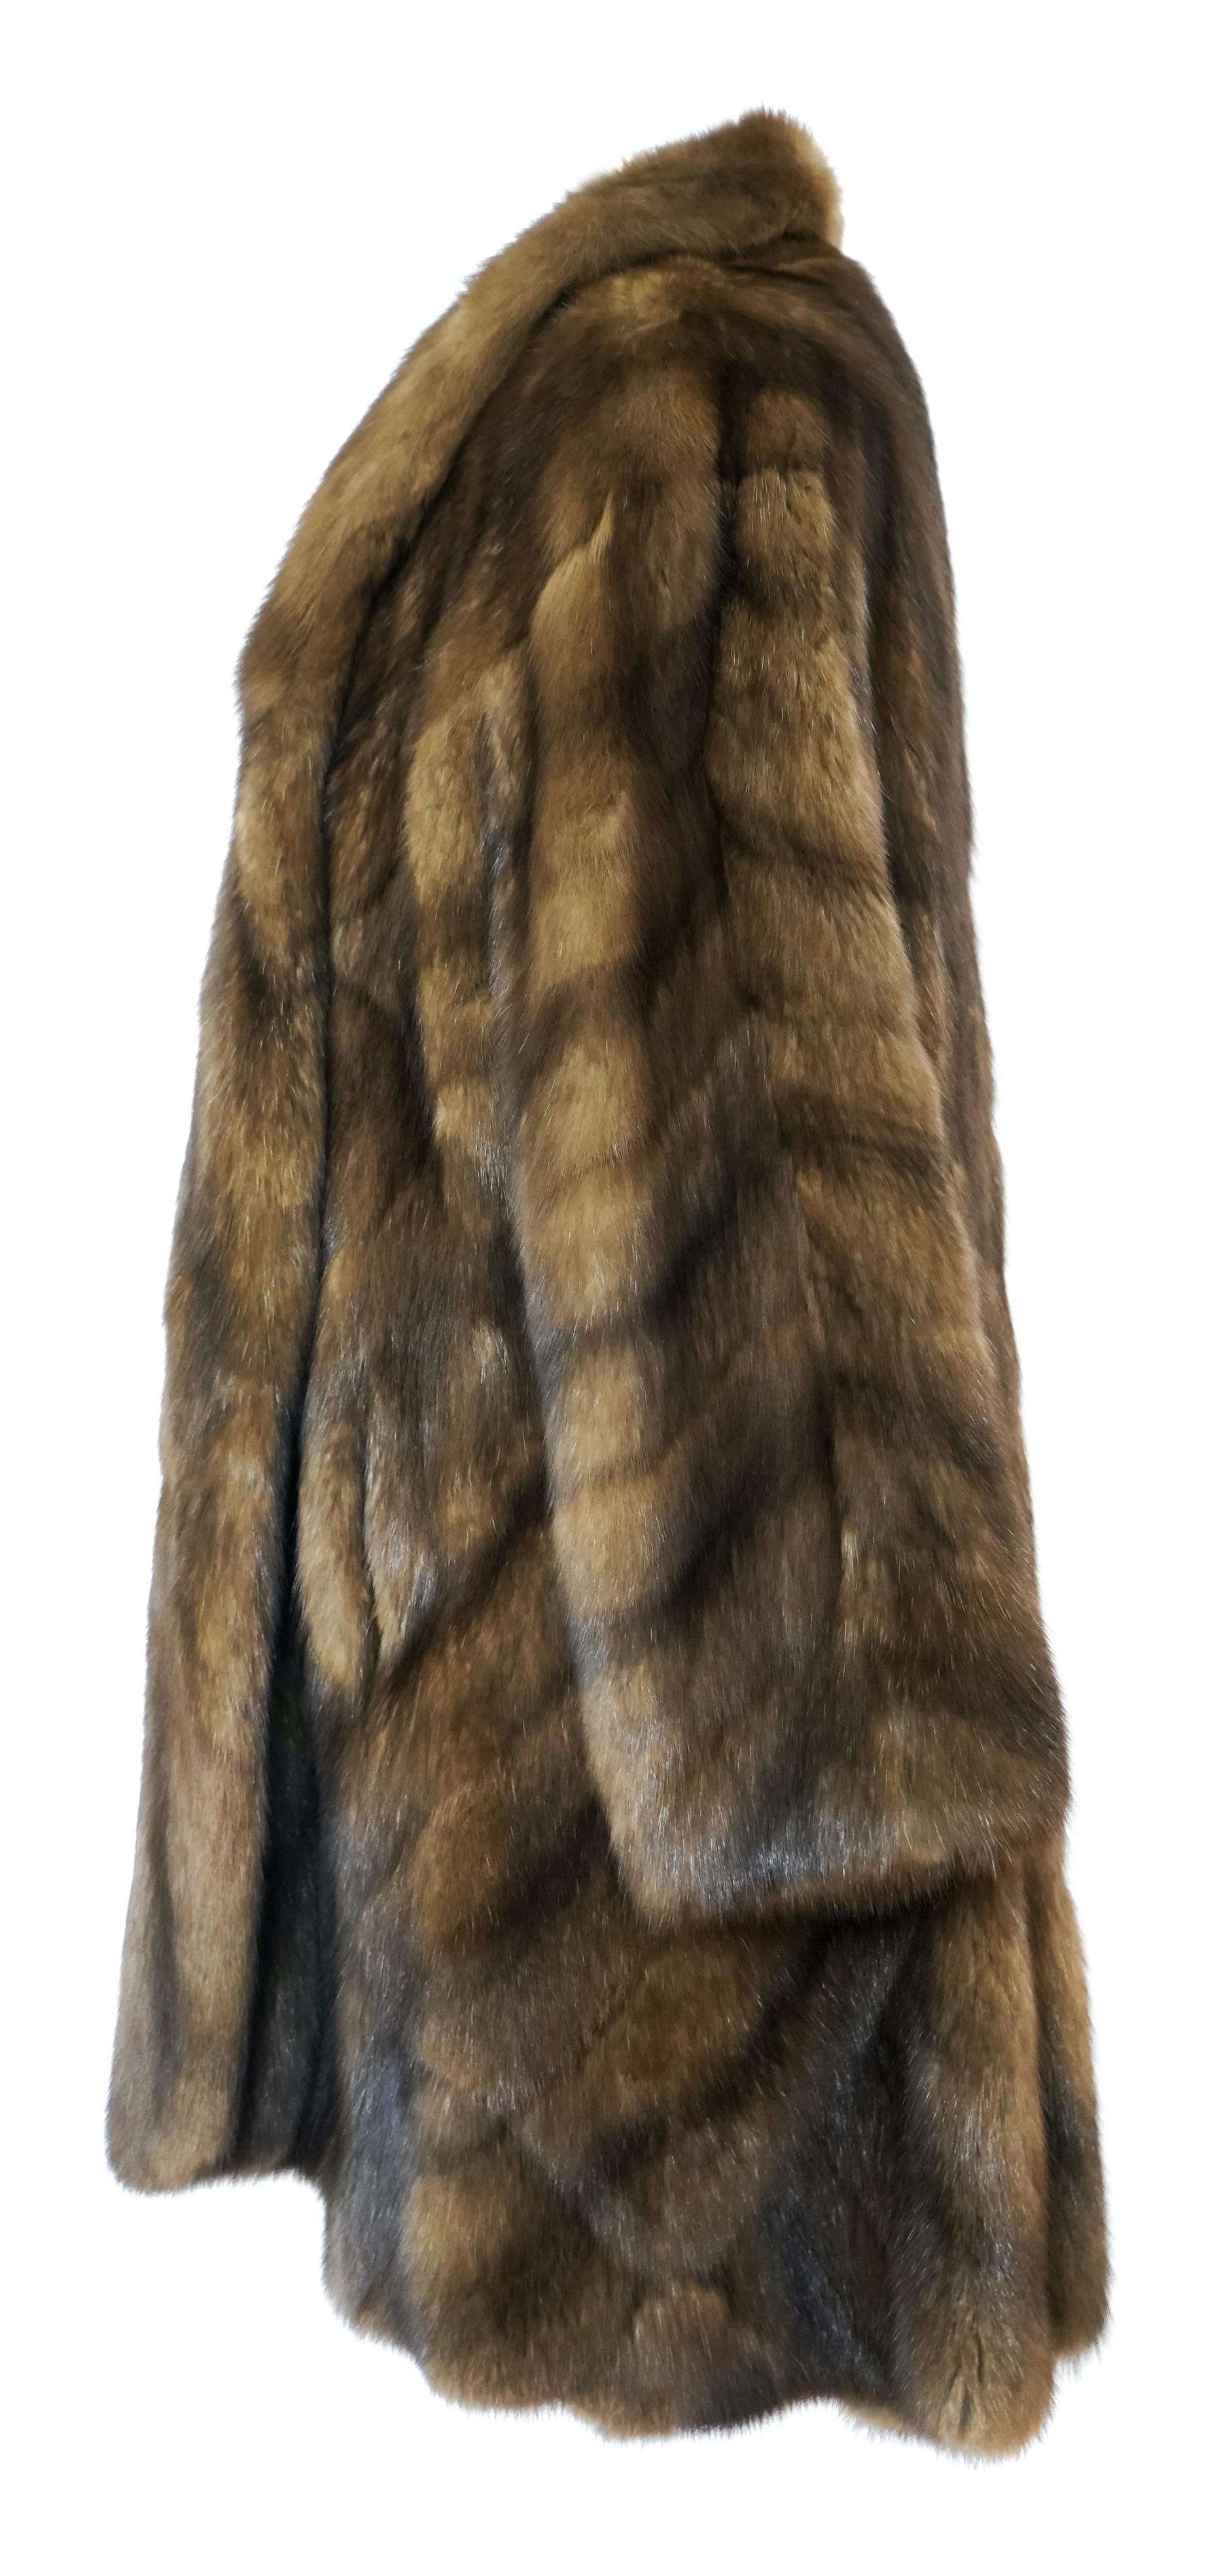 Barguzin sable coat. Collarless, no lining. Fur origin - Russia. 